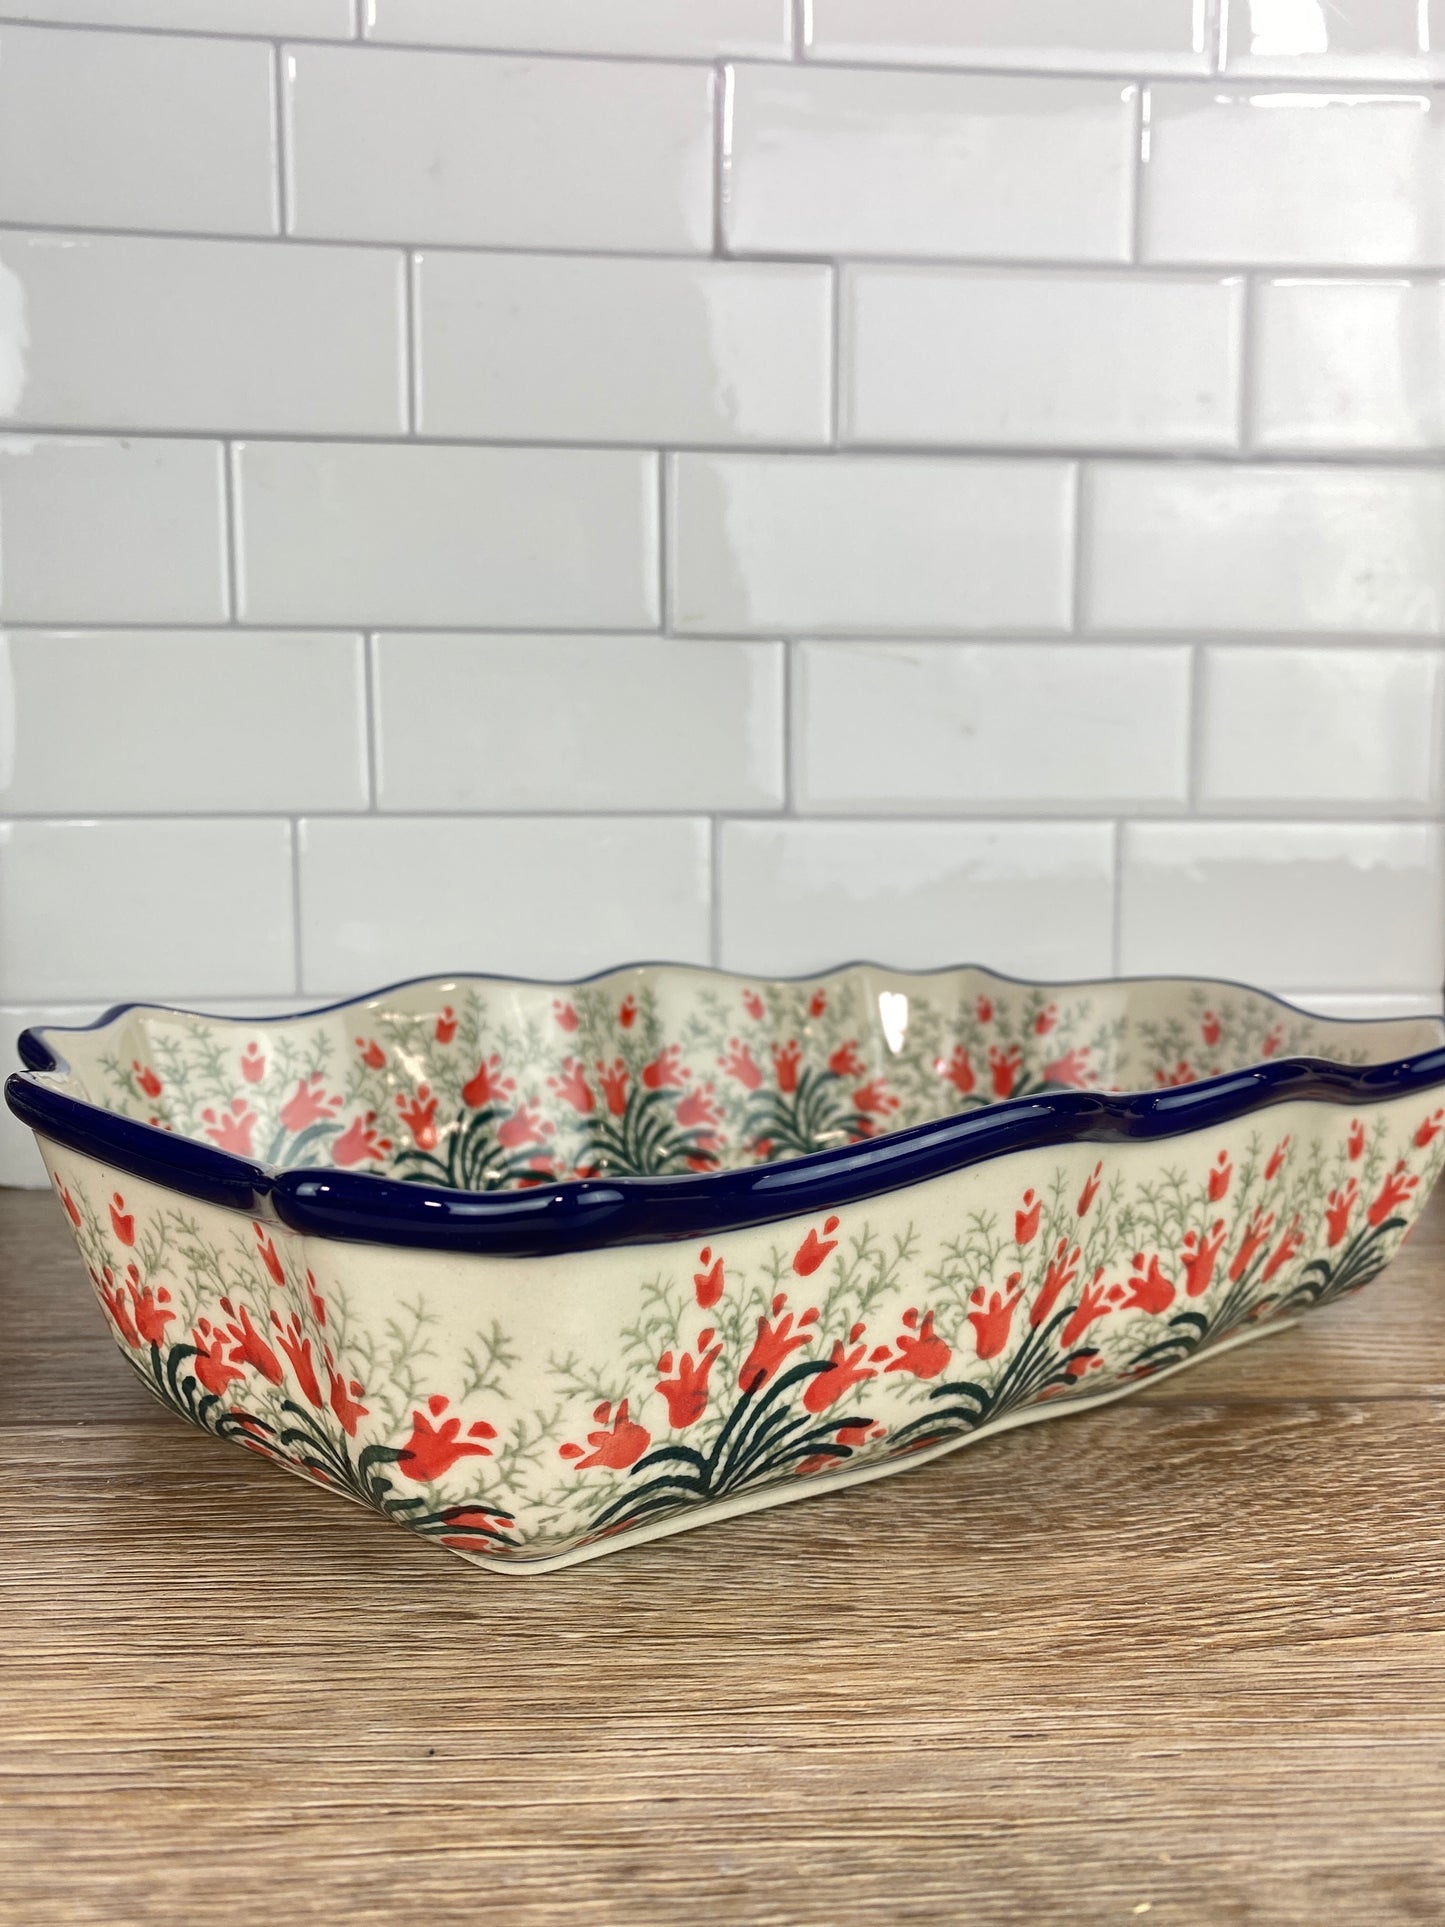 Fancy Rectangular Baker / Bowl - Shape A51 - Pattern 1437